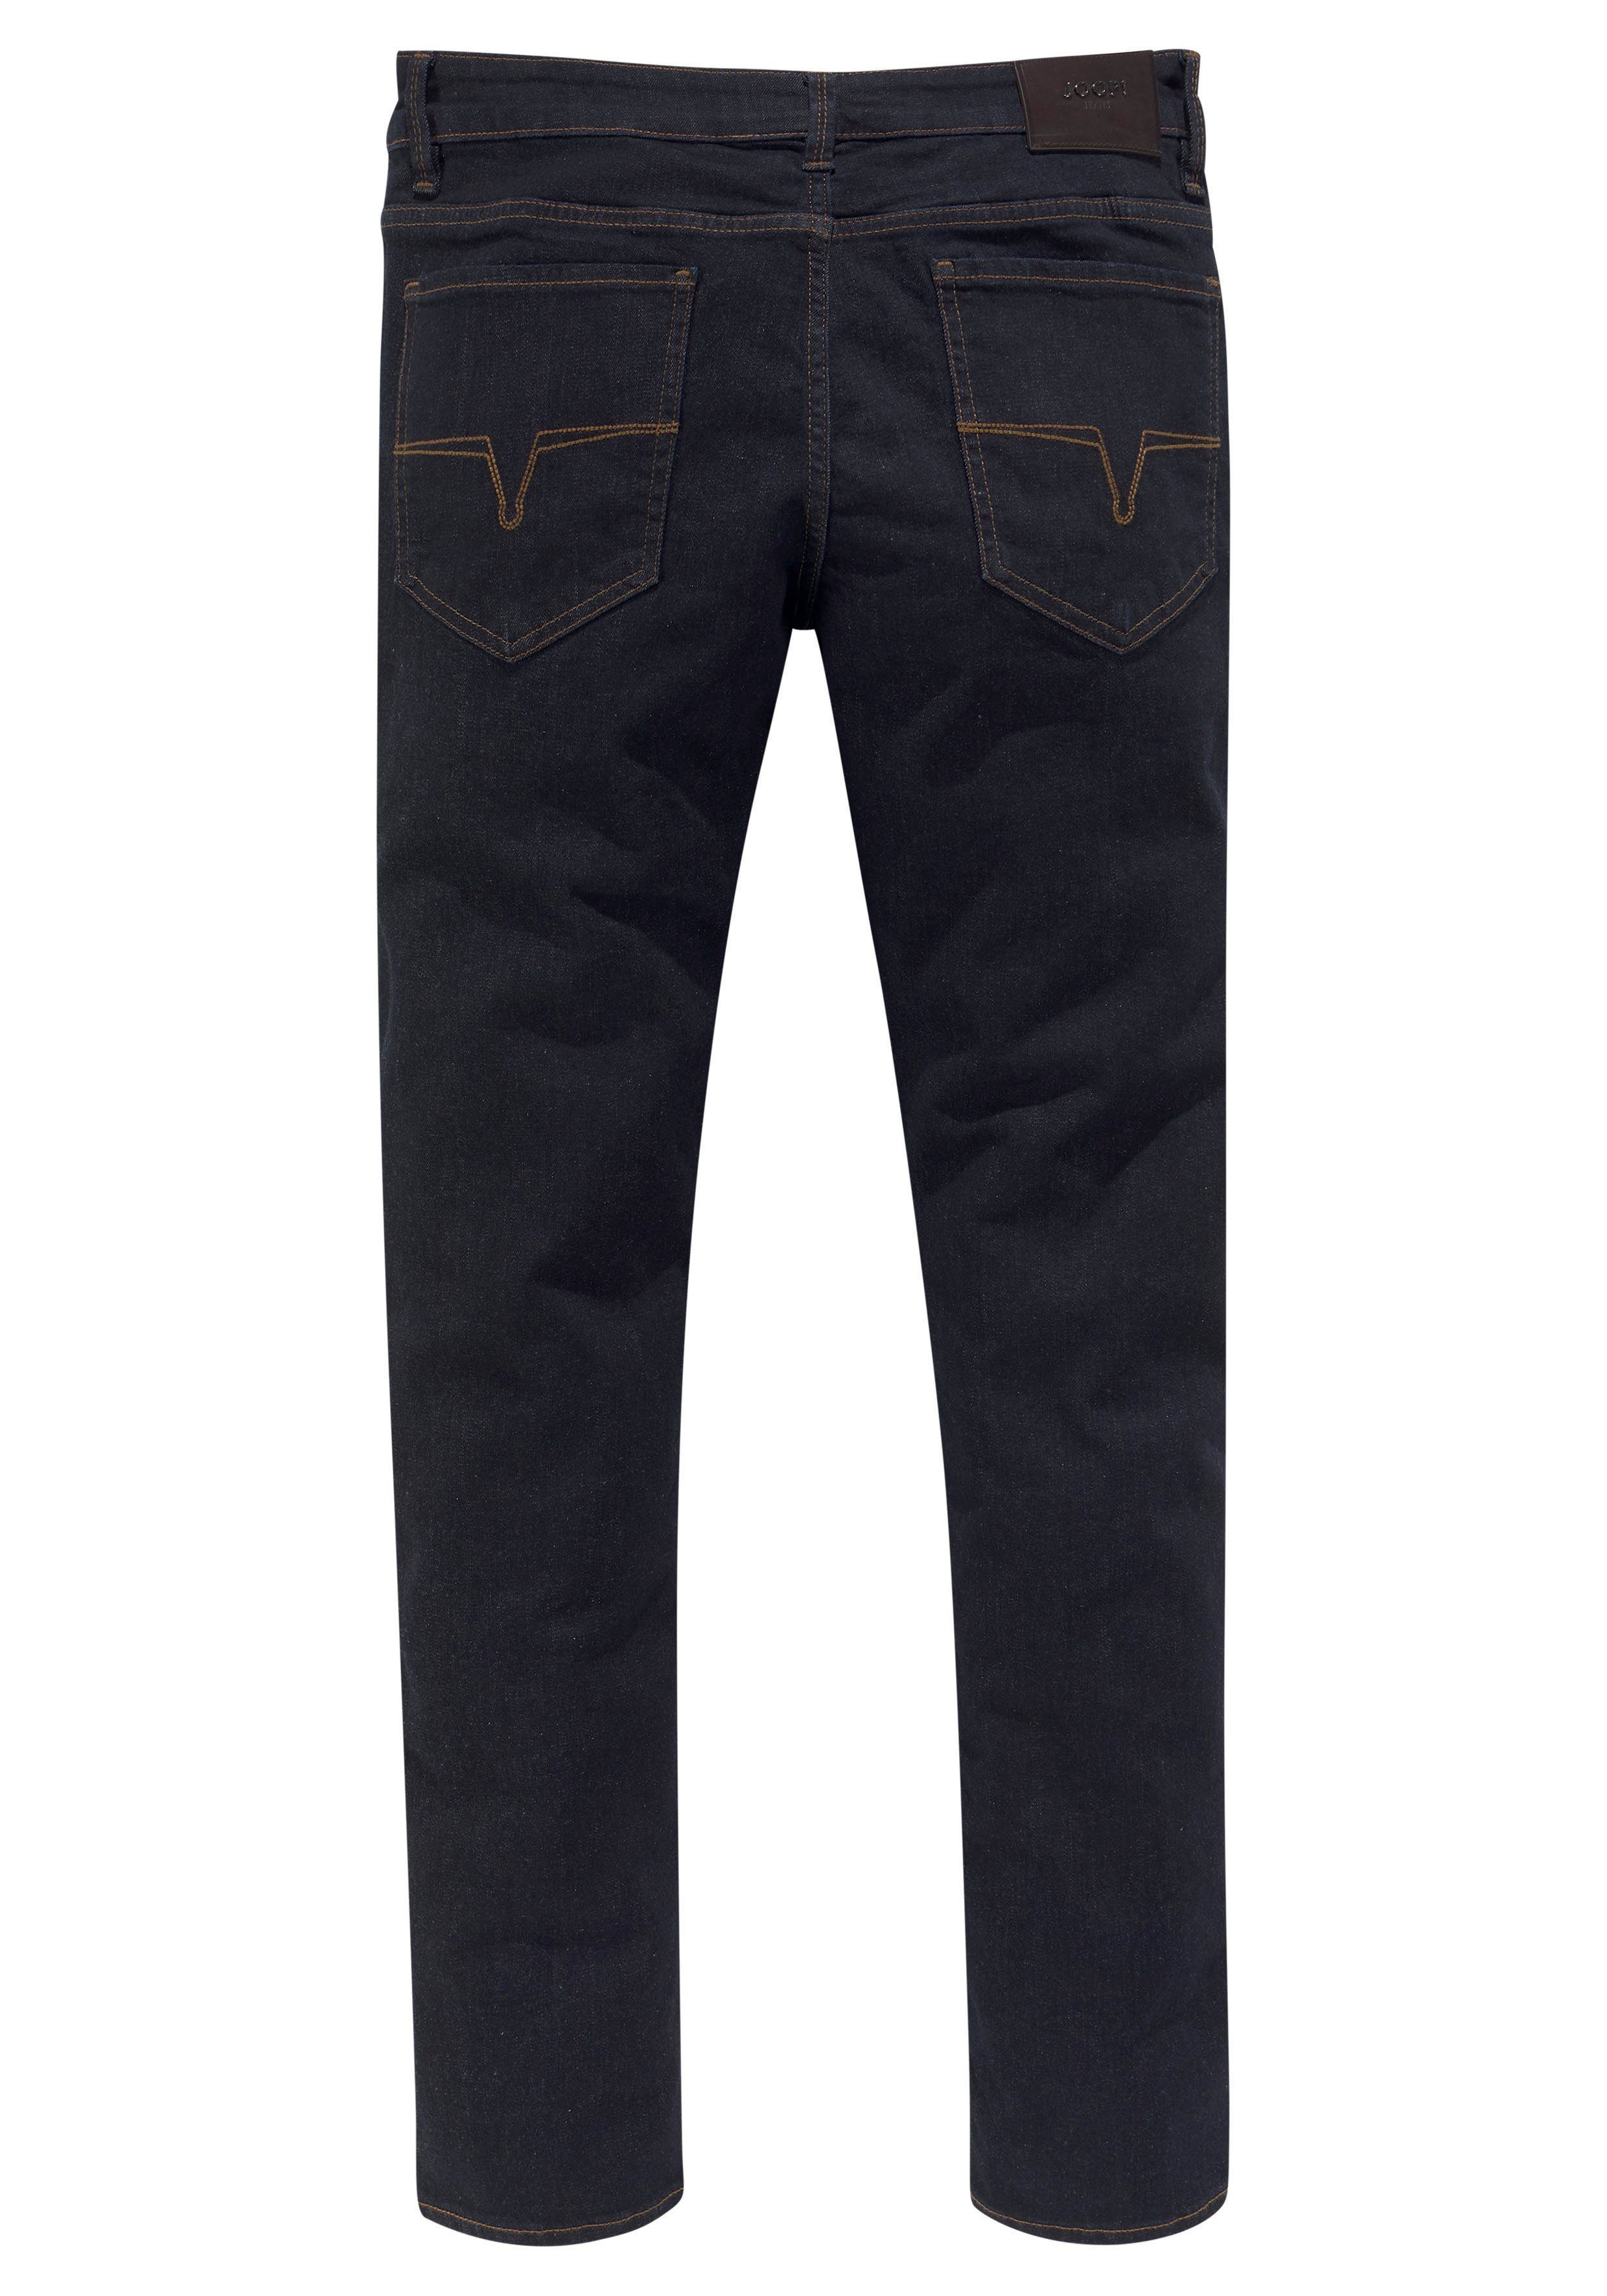 Stephen dark 5-Pocket-Jeans blue Jeans Joop